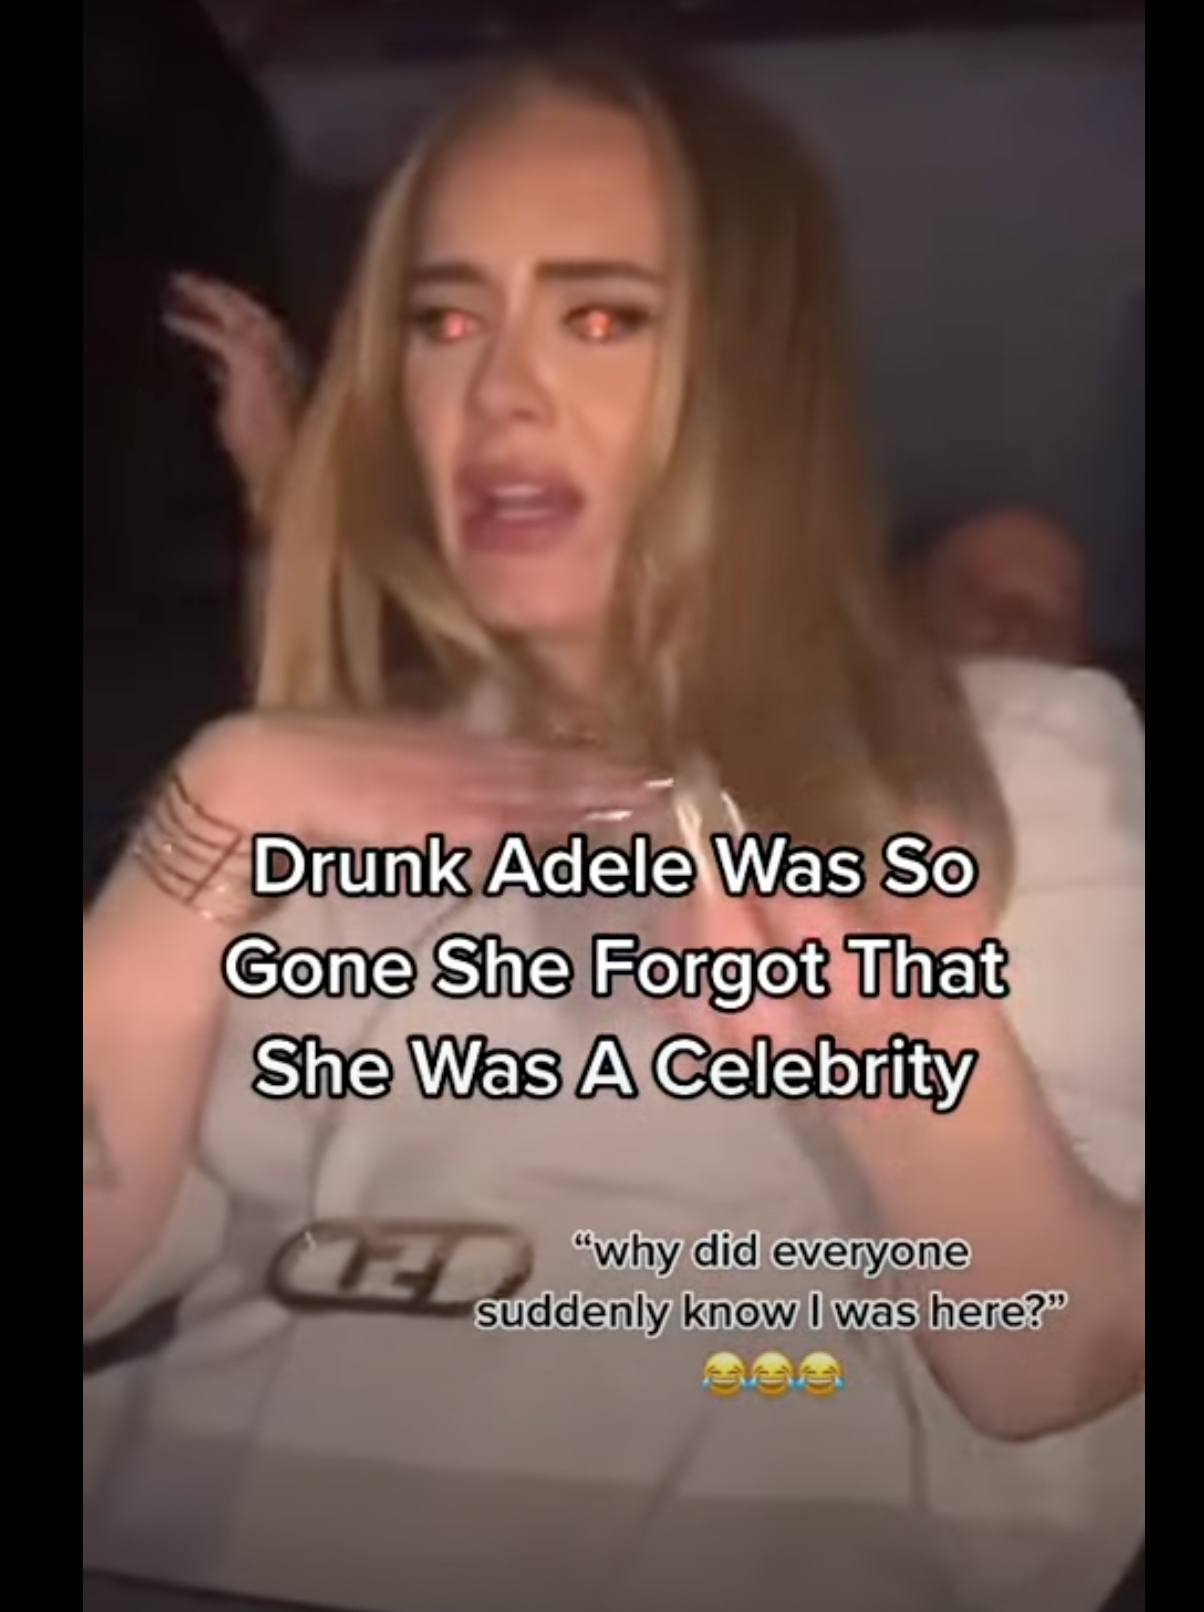 Adele Once Got 'So Drunk' She Forgot She Was Famous